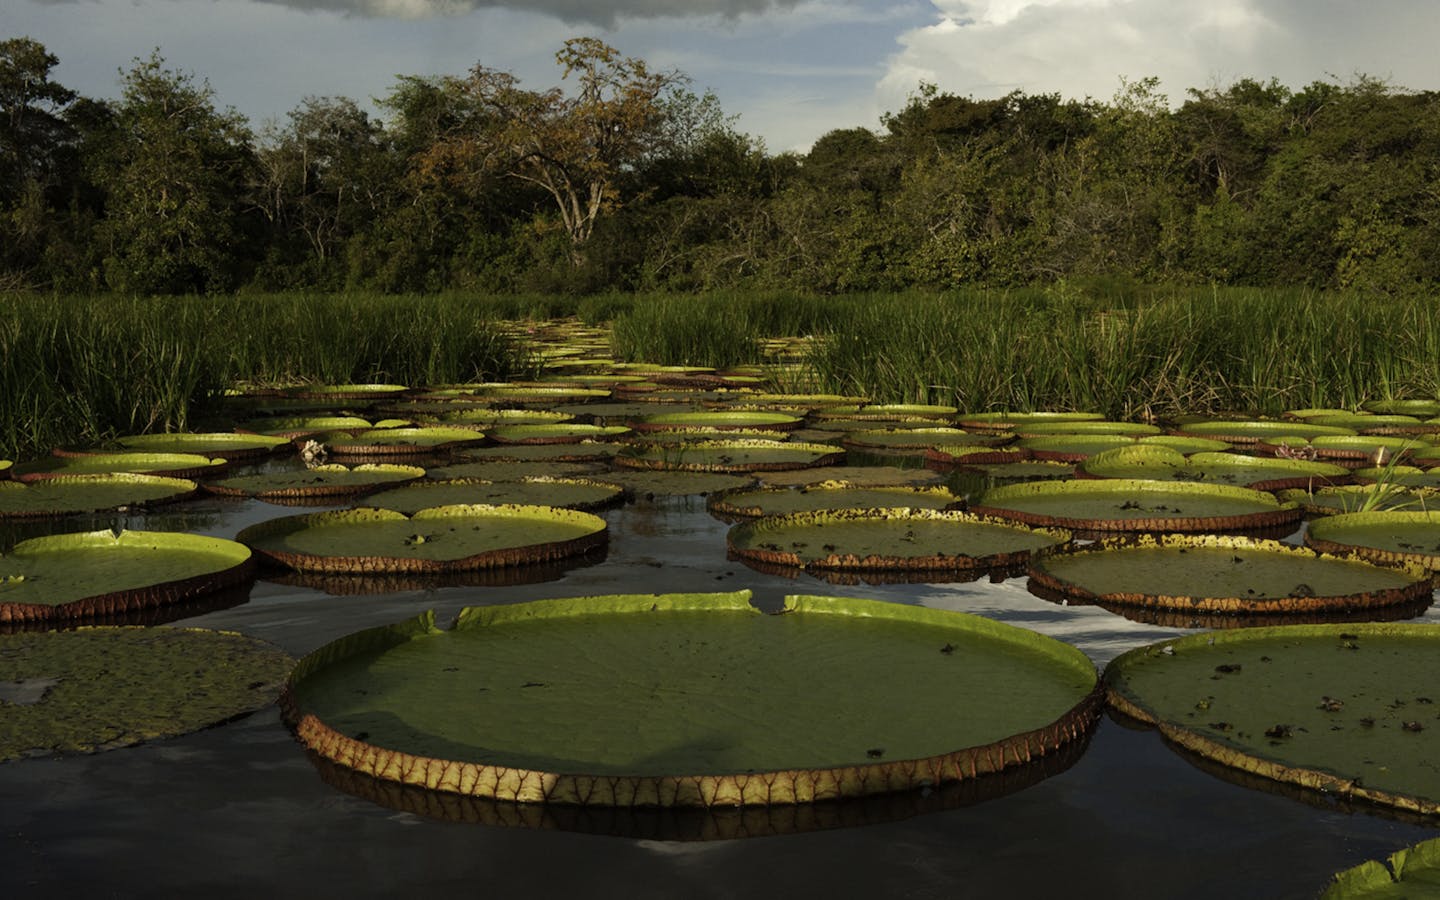 Giant Amazon Water Lily (Victoria amazonica)